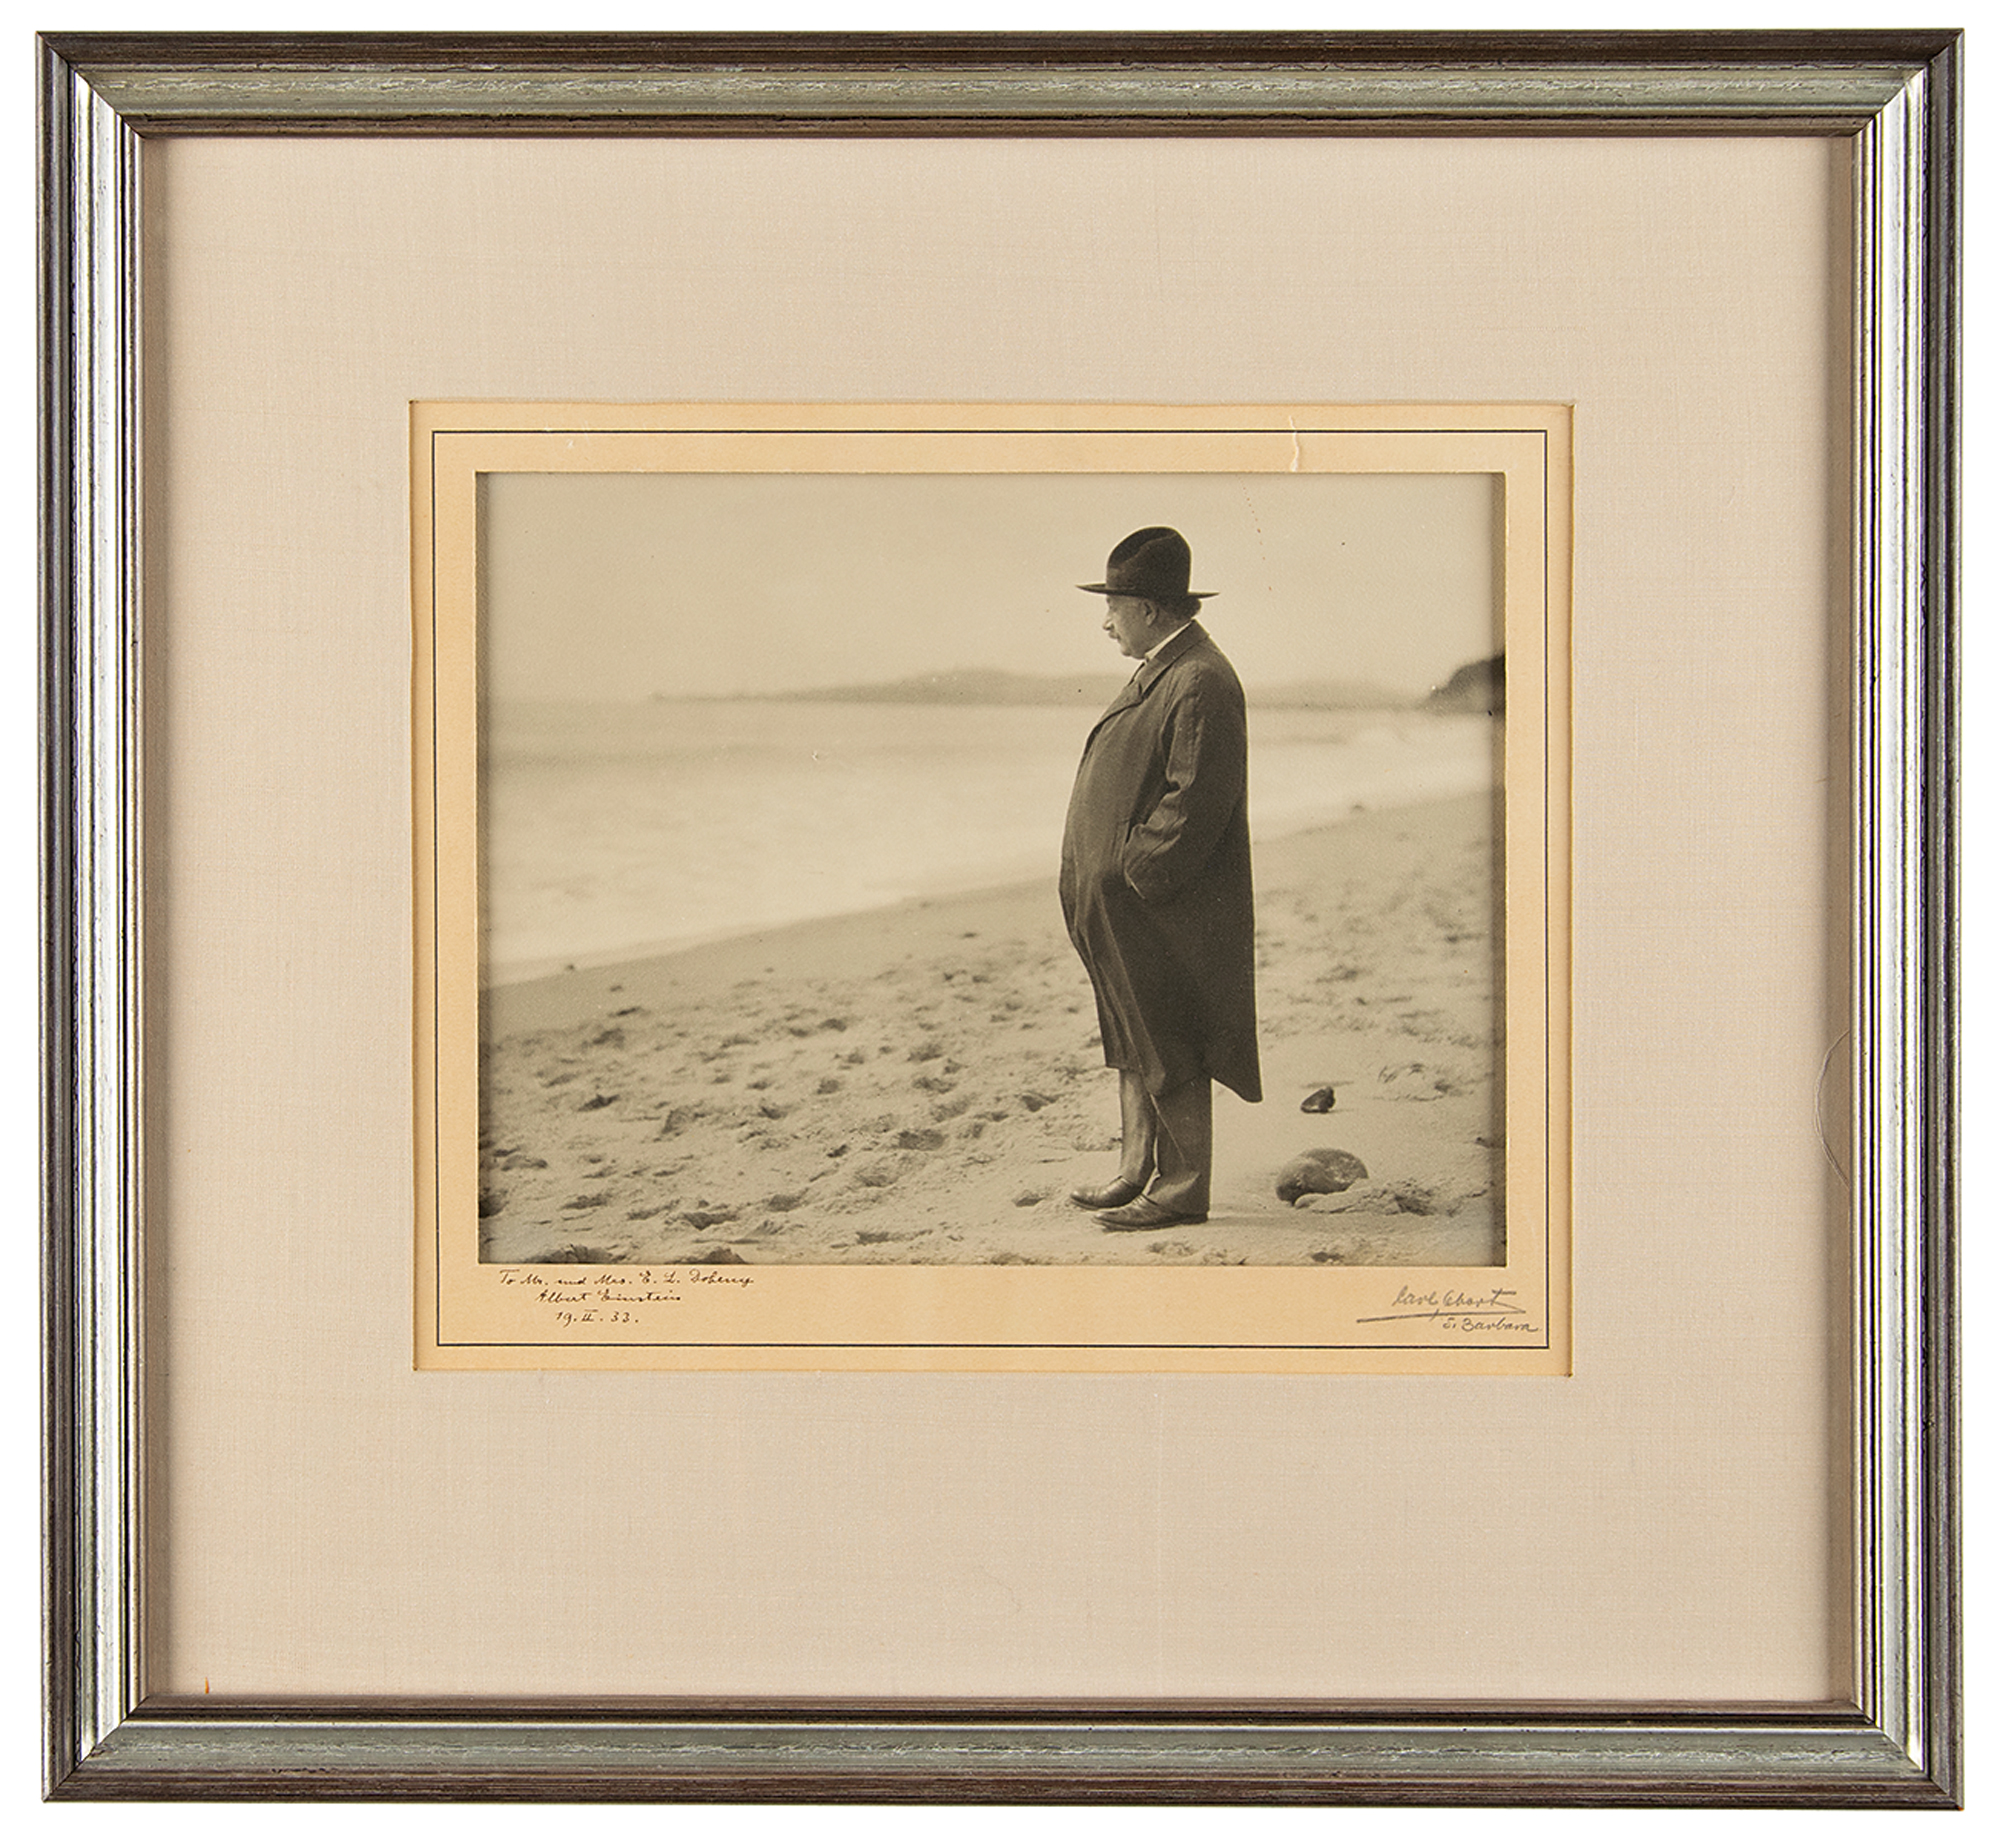 Lot #6048 Albert Einstein Signed Photograph on Santa Barbara Beach (1933) - Image 2